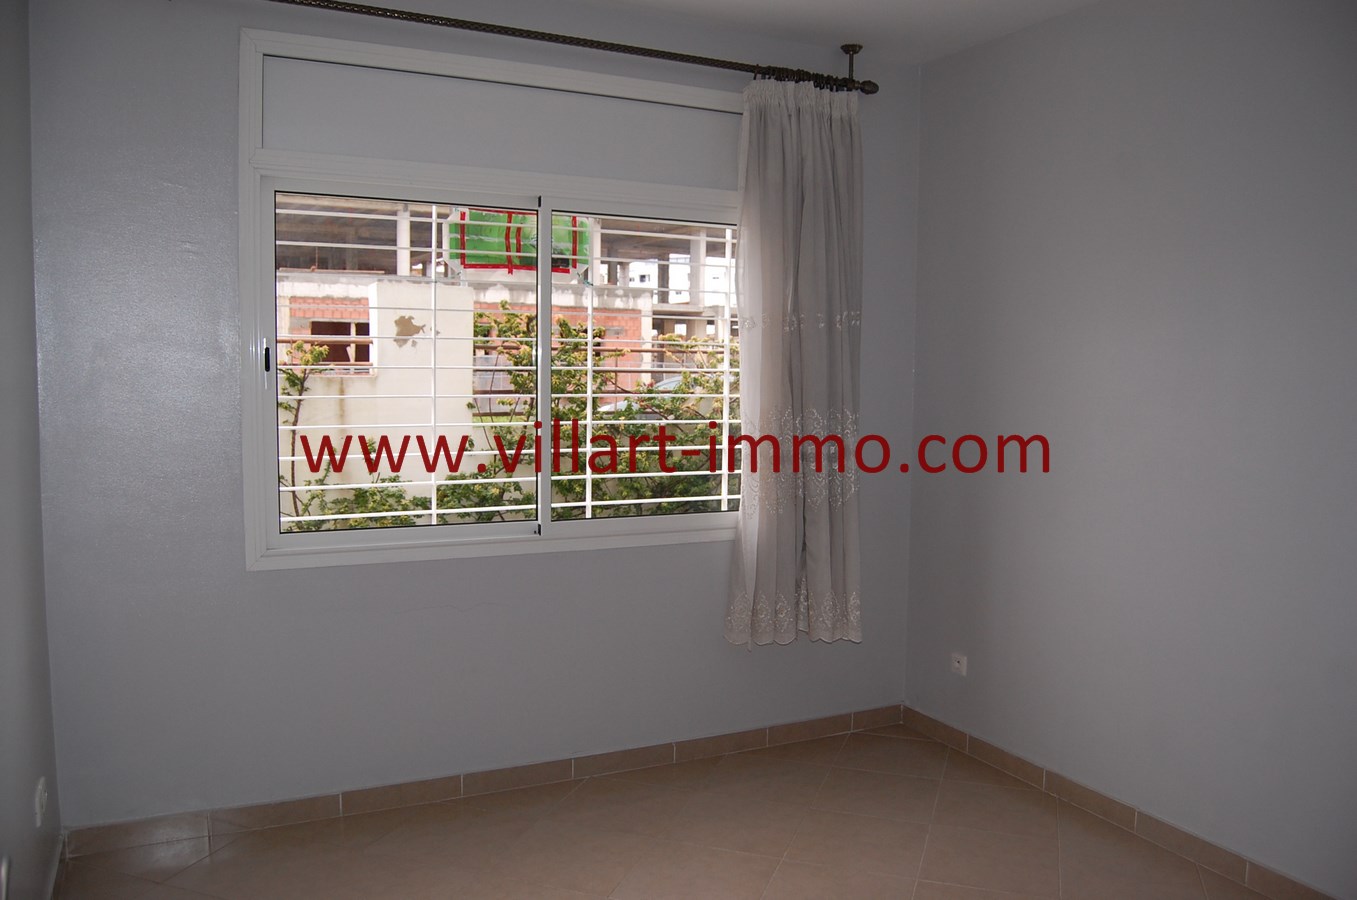 3-Vente-Appartement-Tanger-Route-de-Rabat-Chambre 2-VA474-Villart Immo